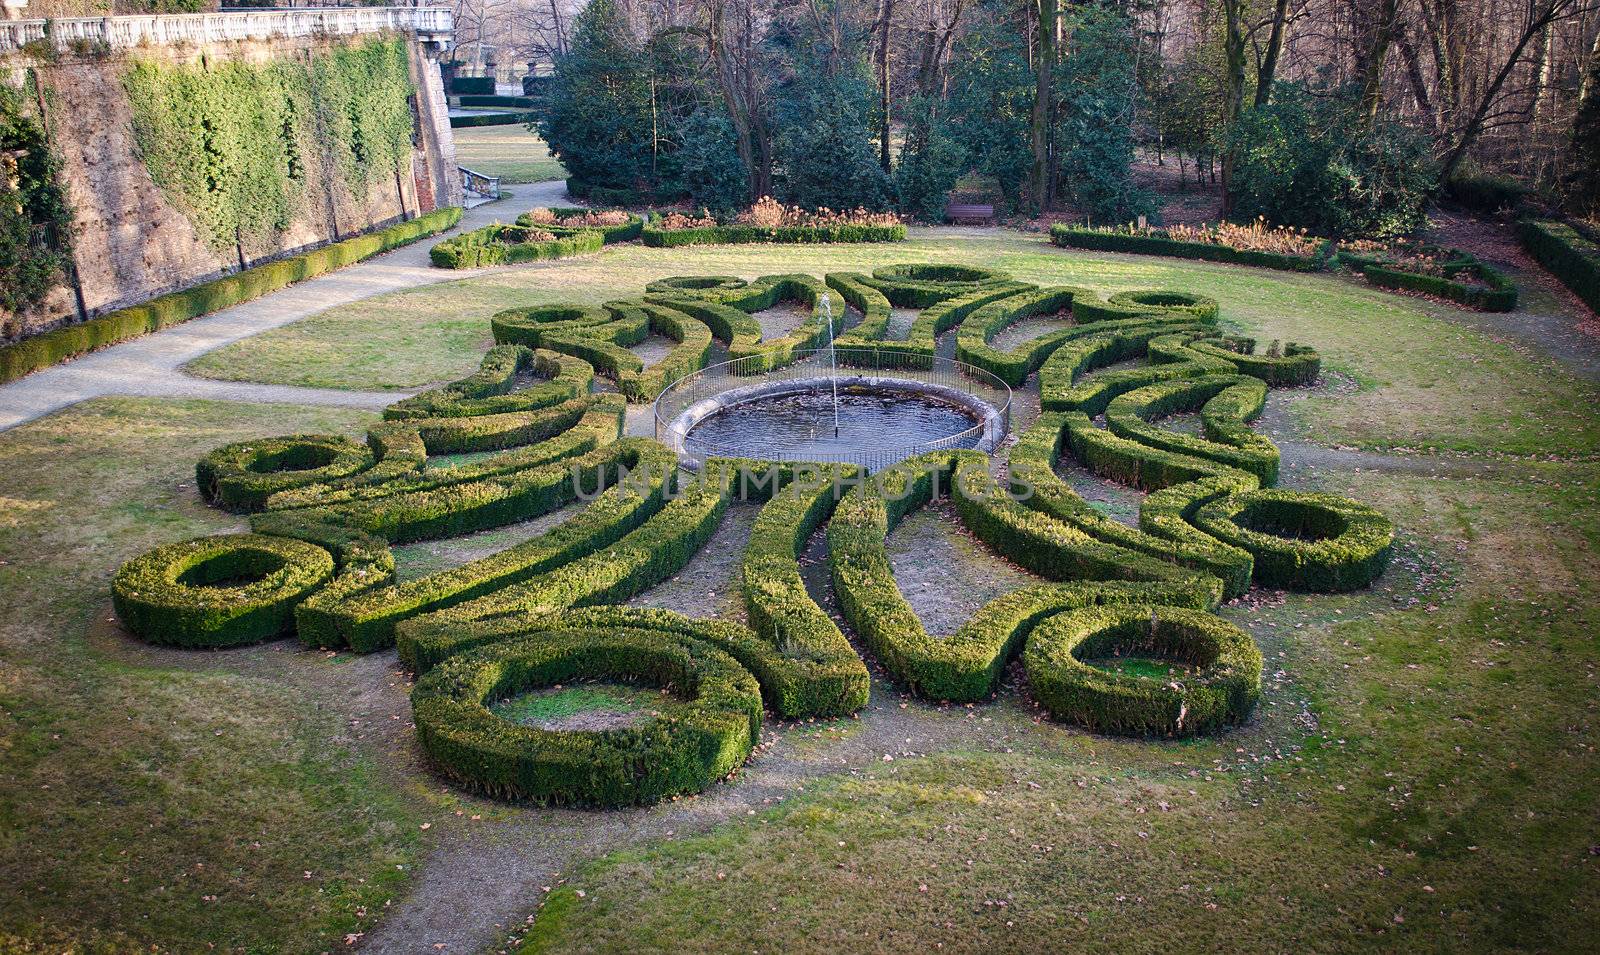 Decorative hedges form geometric shapes in classic, elegant garden